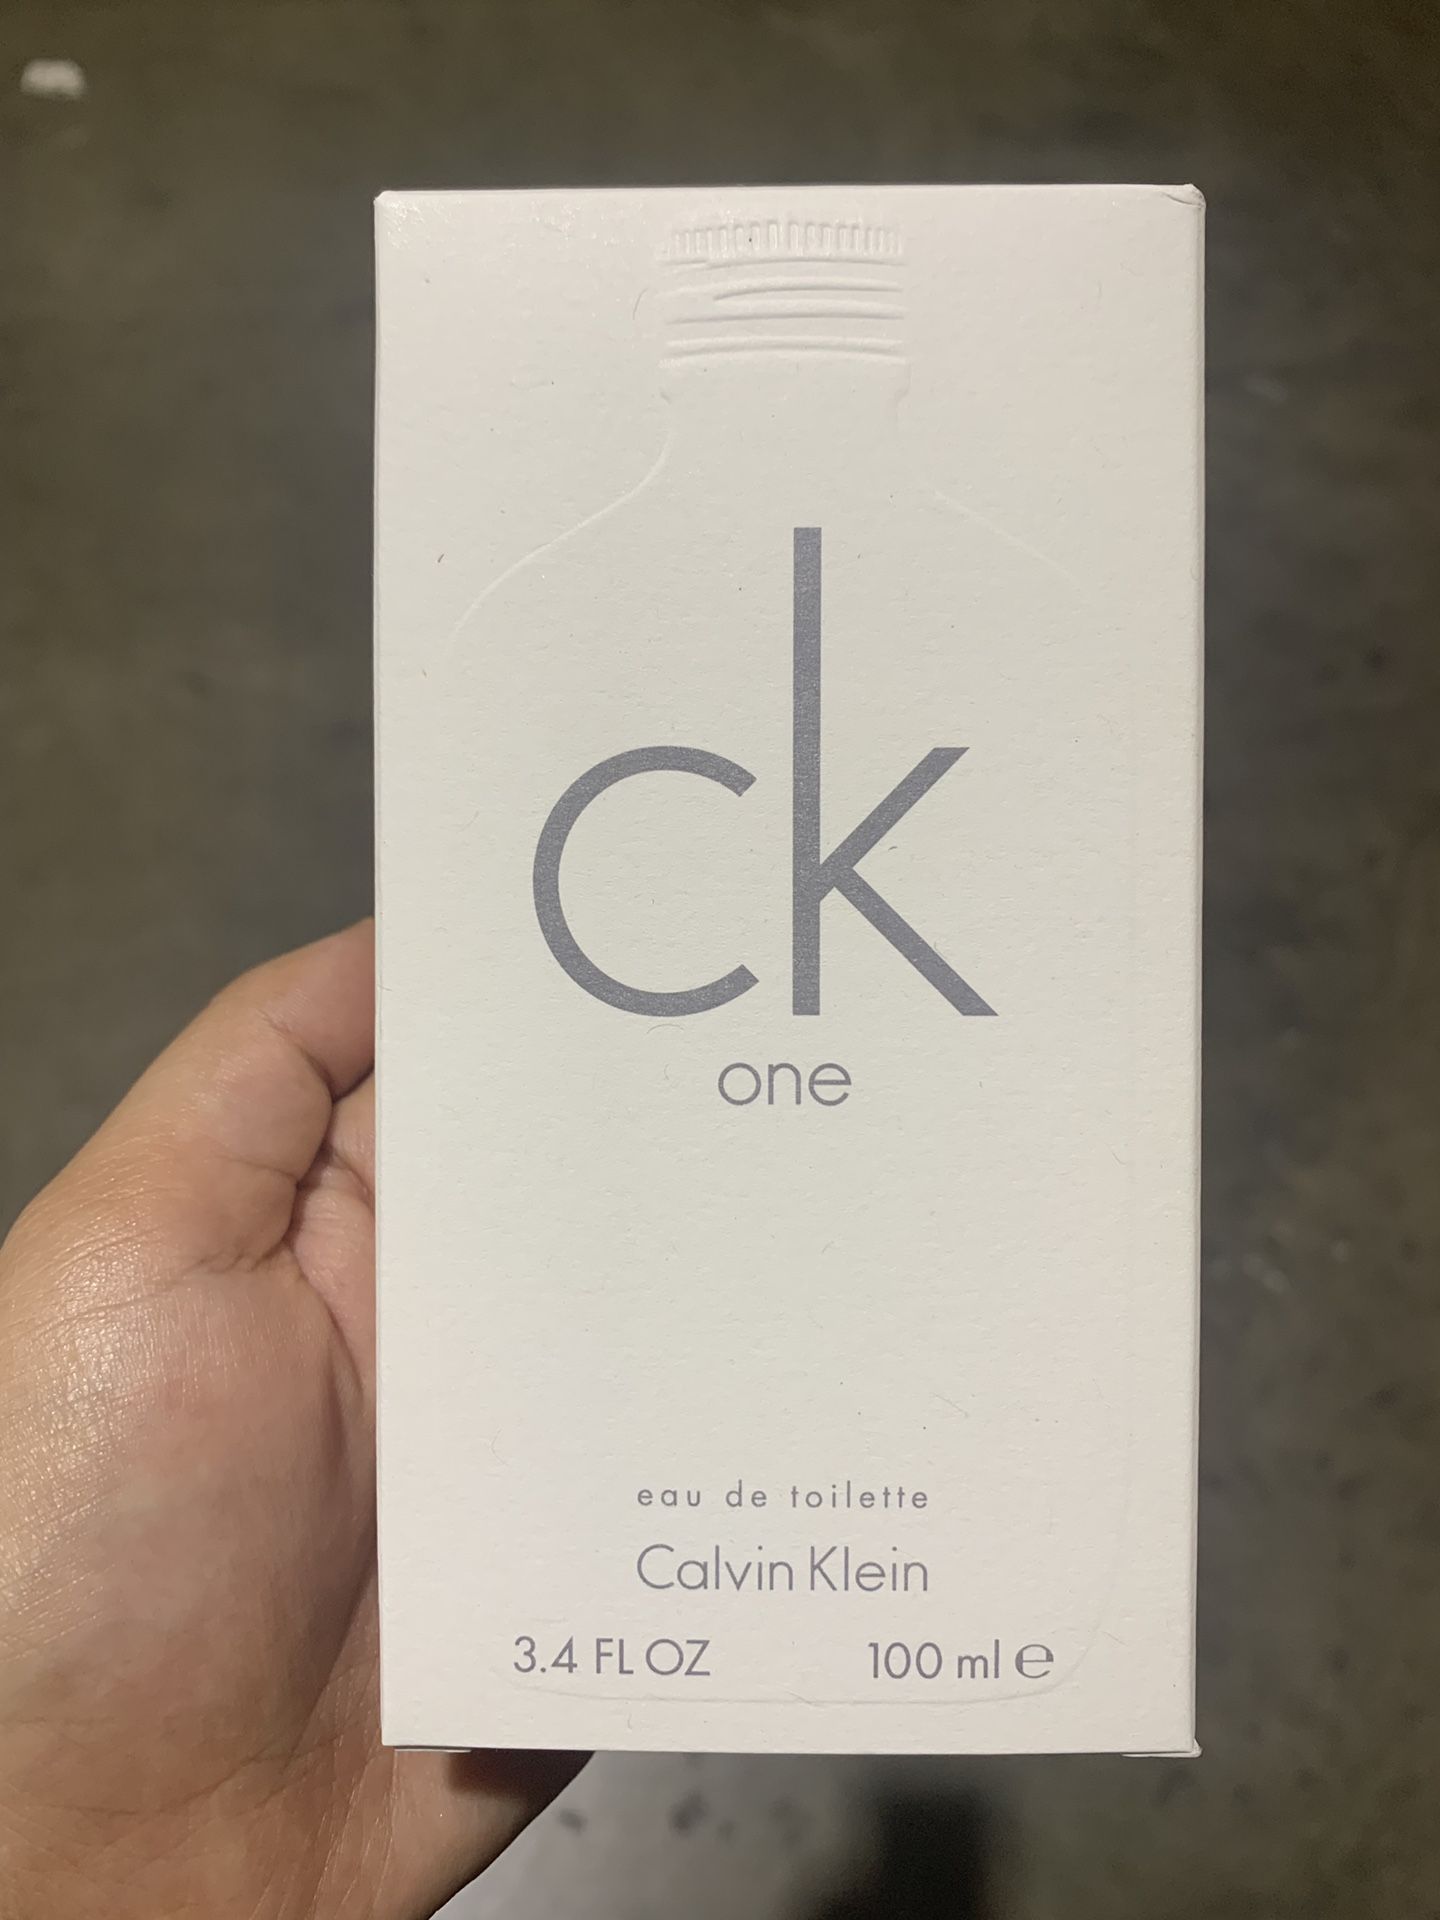 CK One Perfume